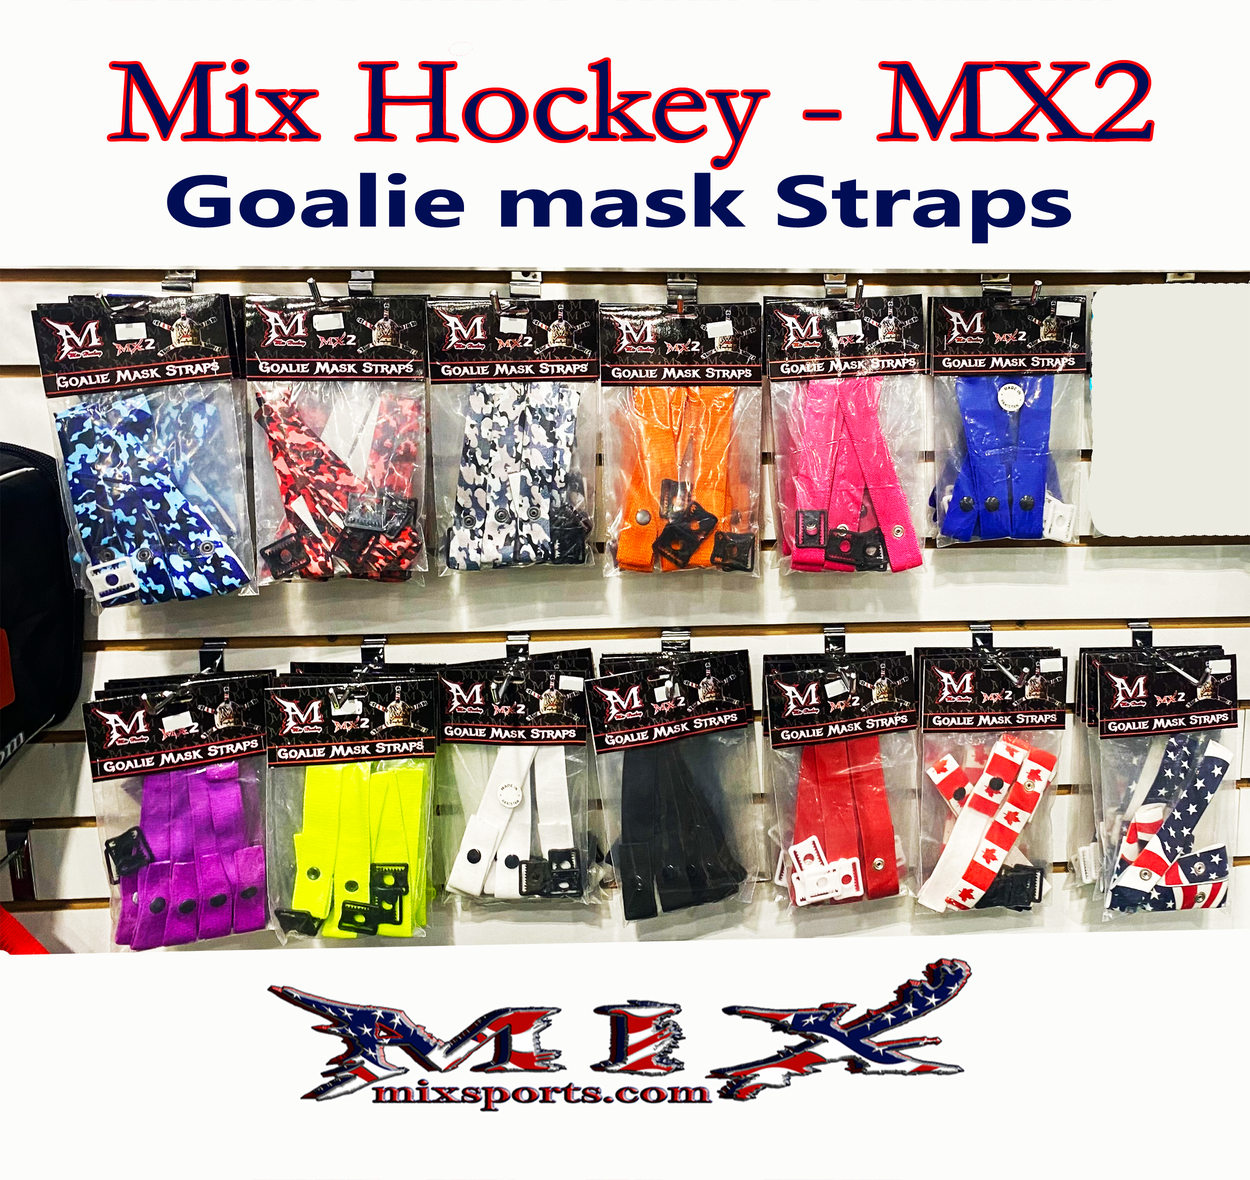 Mix Hockey (MX2) Goalie mask helmet Outside backplate straps (14 colors available)